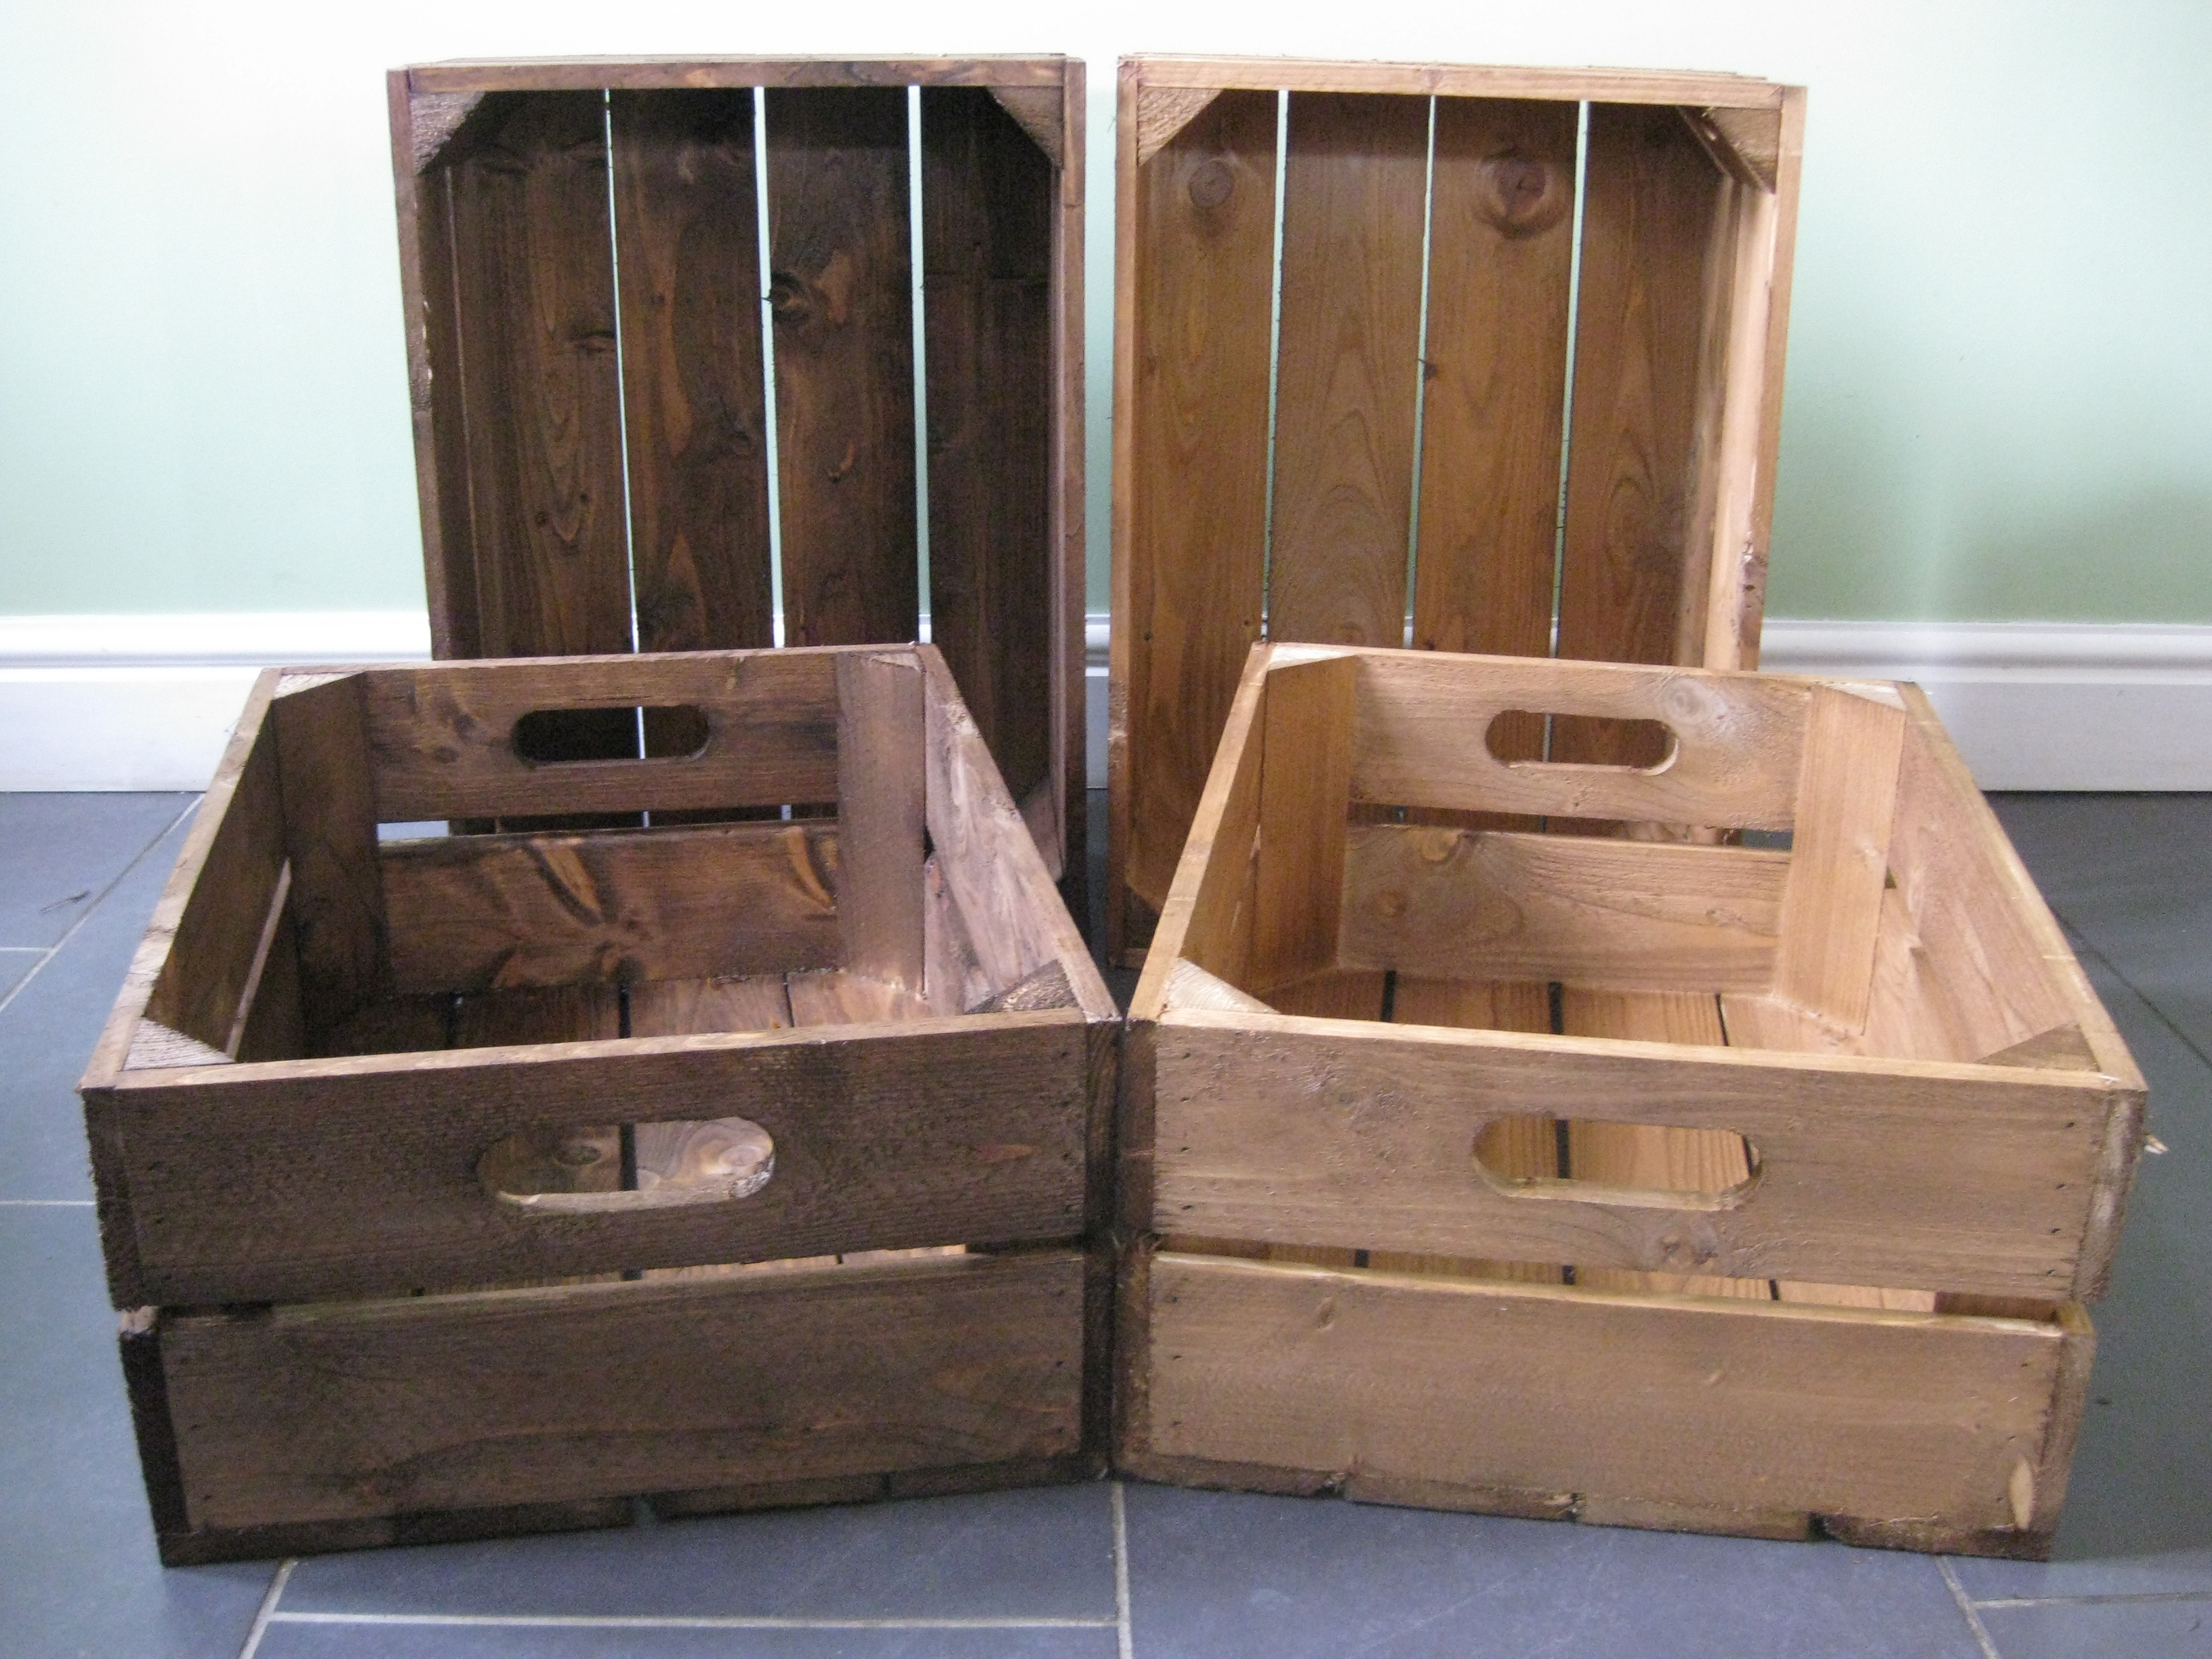 Wooden Crate Bundle Deals! | Great Crates